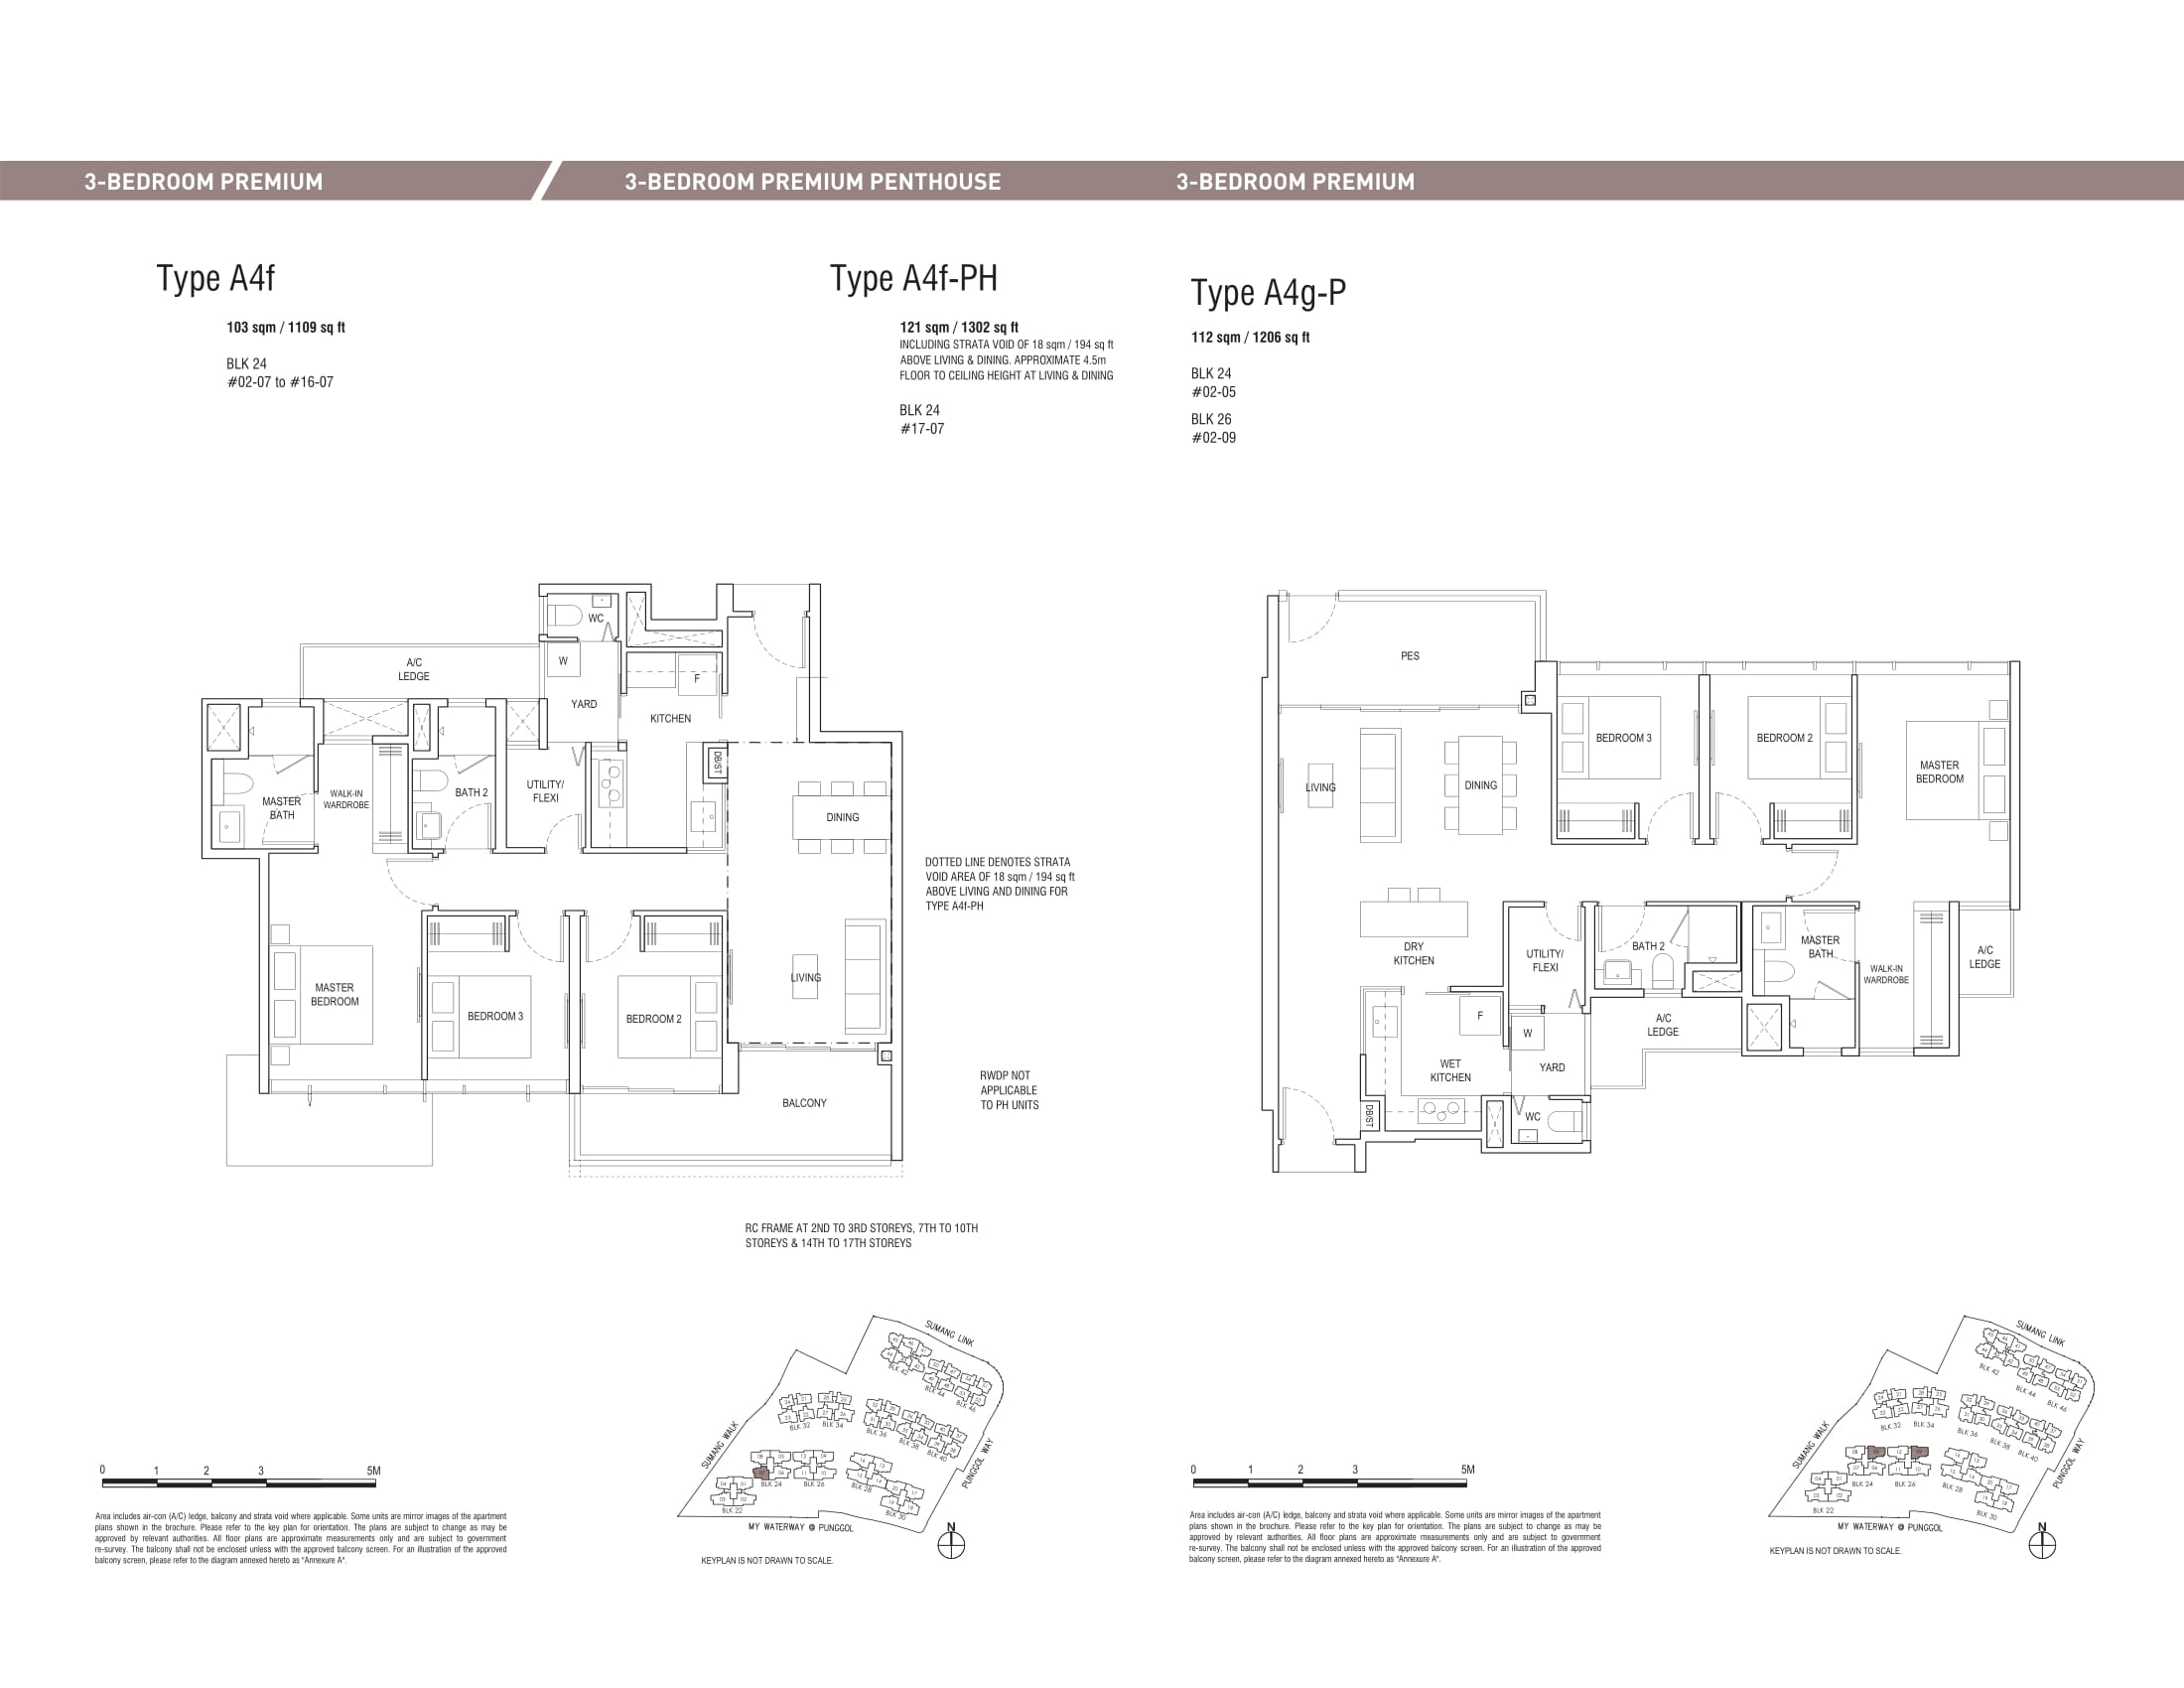 Piermont Grand EC's three-bedroom premium and three-bedroom premium penthouse types